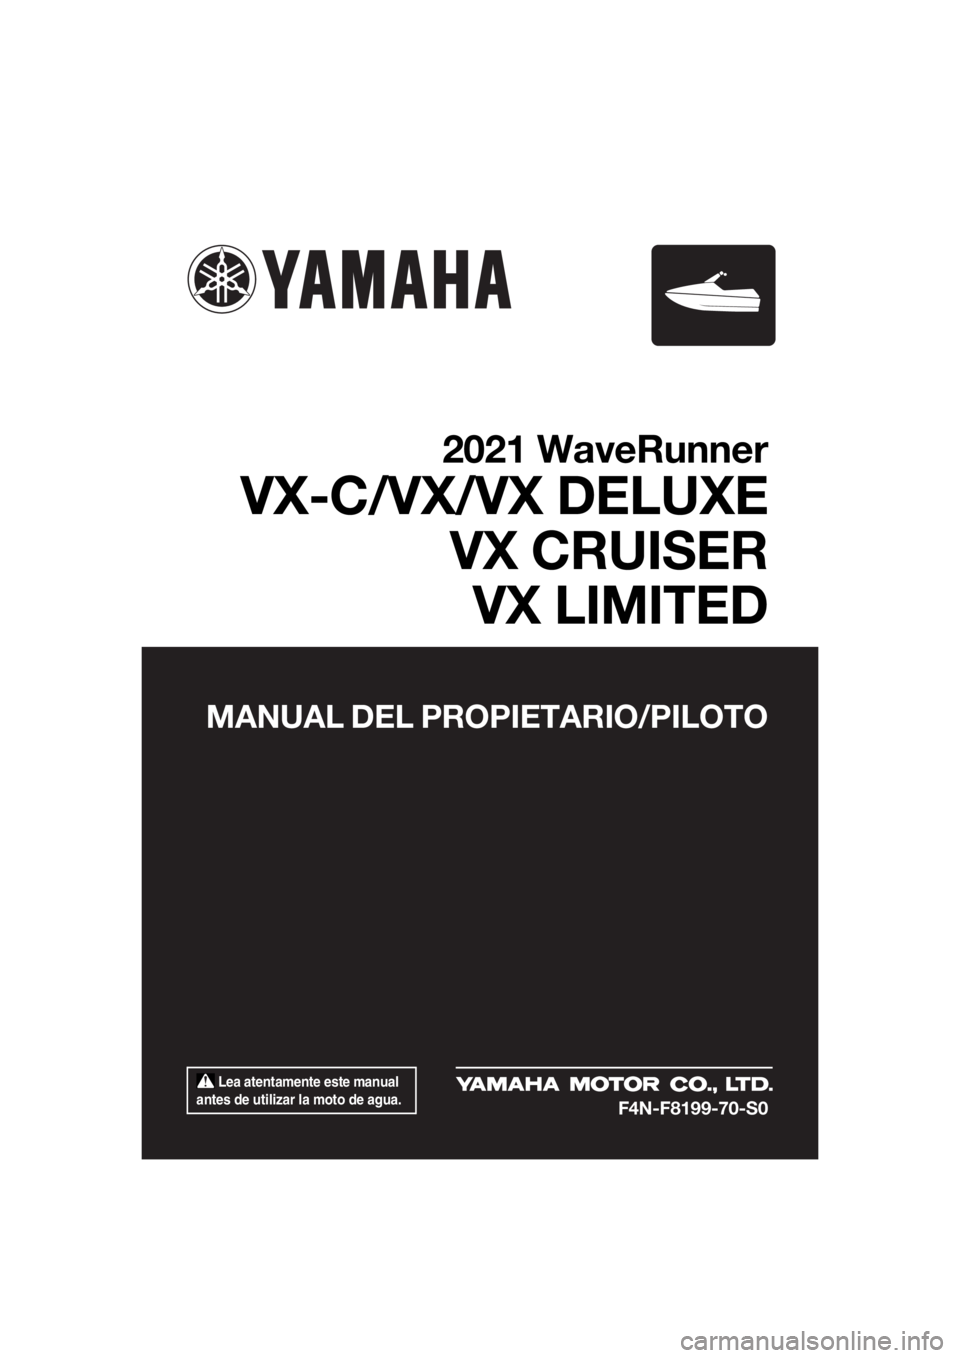 YAMAHA VX CRUISER 2021  Manuale de Empleo (in Spanish)  Lea atentamente este manual 
antes de utilizar la moto de agua.
MANUAL DEL PROPIETARIO/PILOTO
2021 WaveRunner
VX-C/VX/VX DELUXE VX CRUISERVX LIMITED
F4N-F8199-70-S0
UF4N70S0.book  Page 1  Wednesday, 